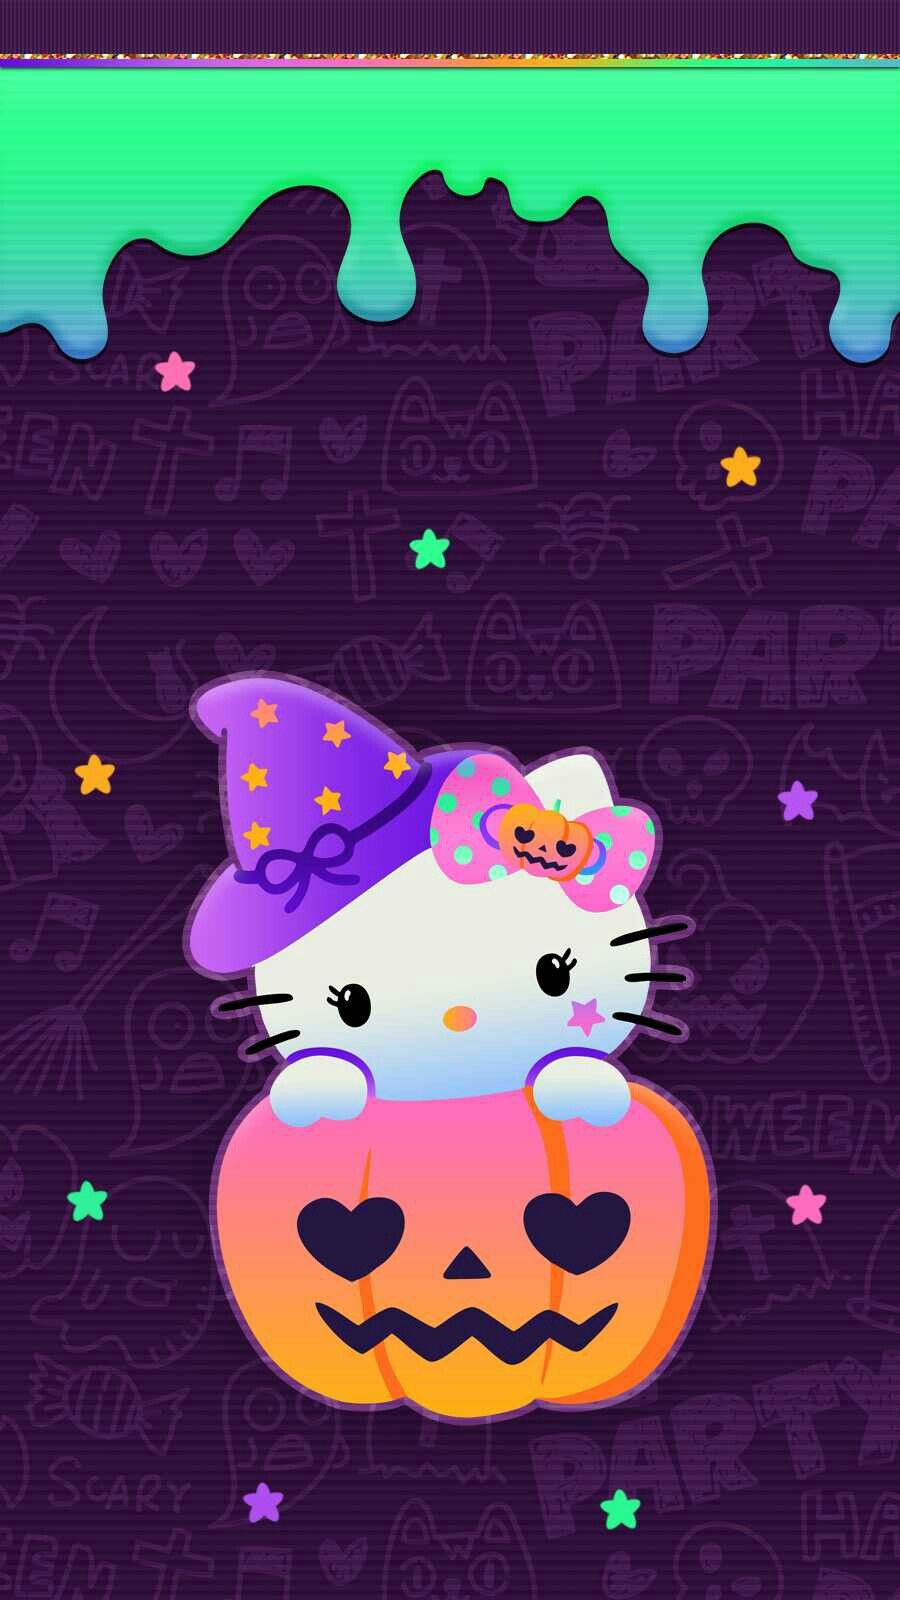 Cute Wallz. Hello kitty halloween wallpaper, Hello kitty wallpaper, Hello kitty halloween